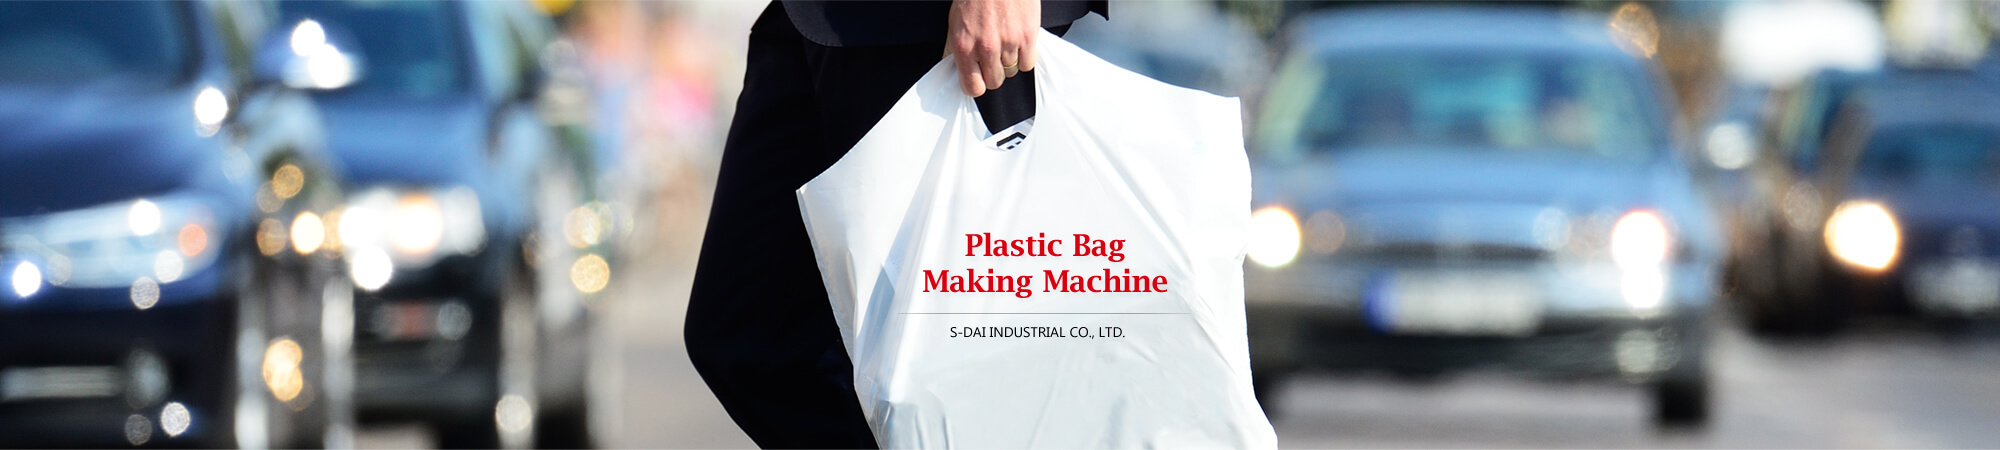 kv banner of application on  express bag, plastic courier bag making machine manufacturing services